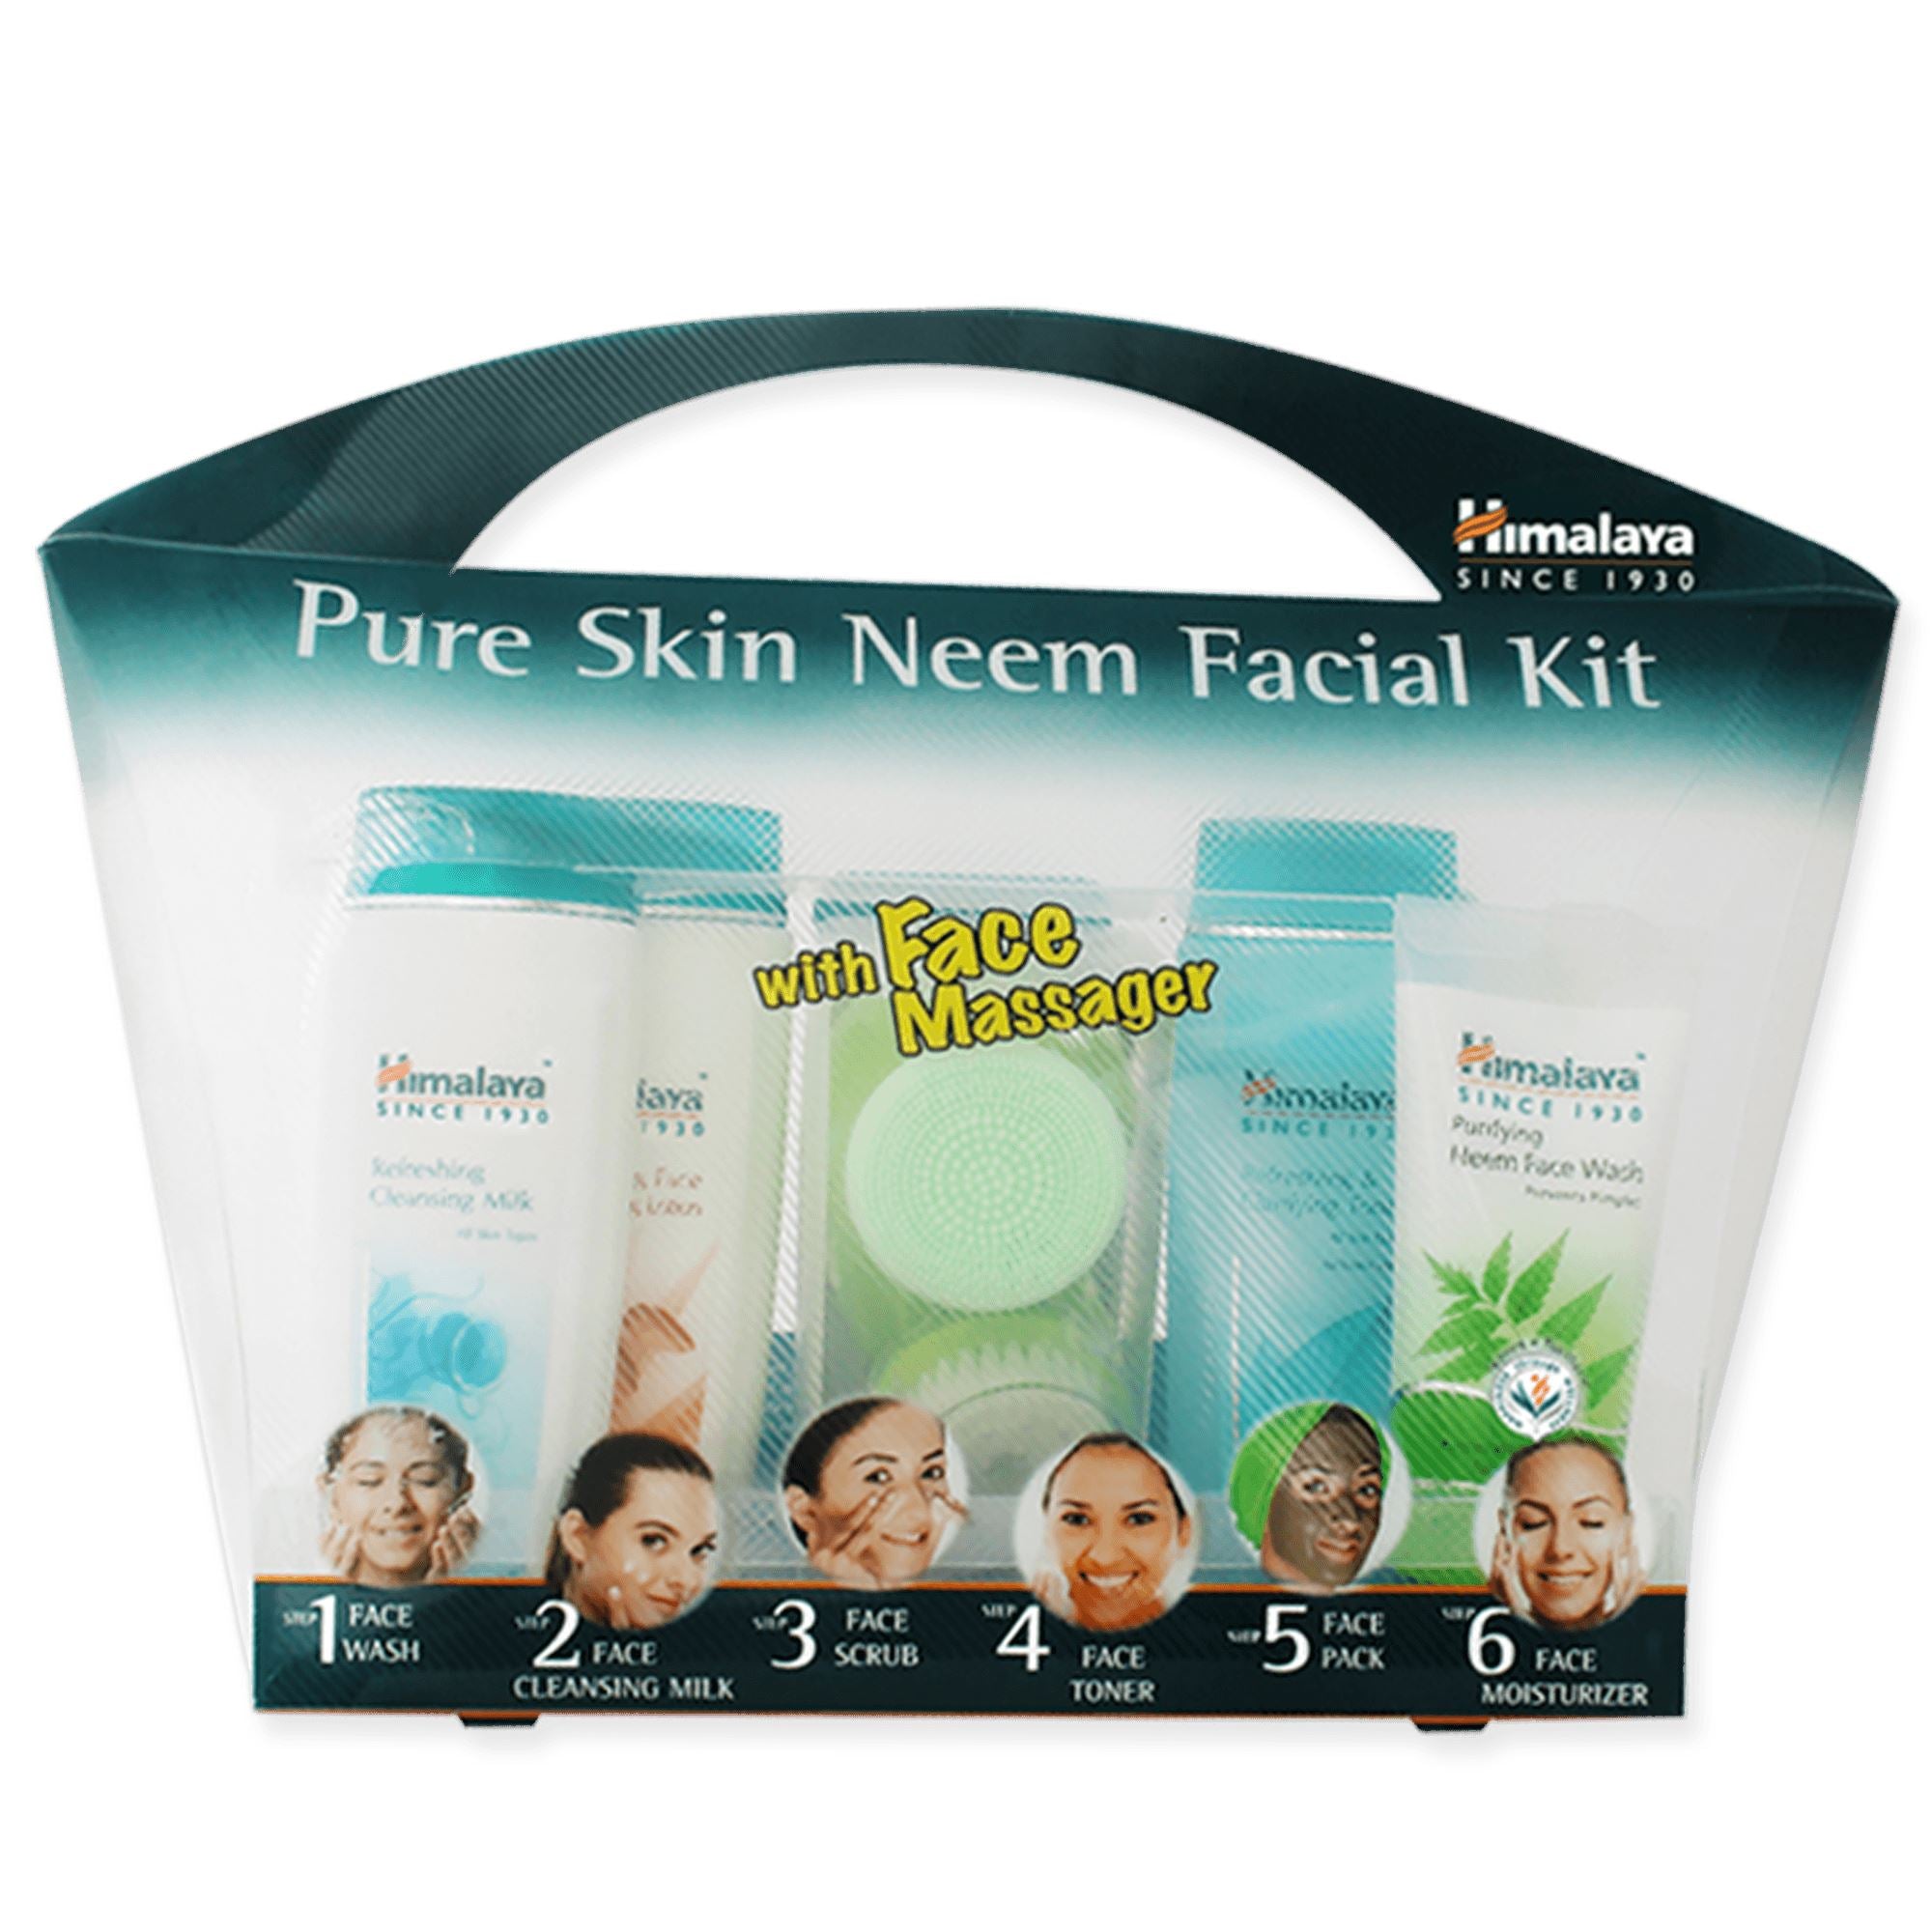 Himalaya Pure Skin Neem Facial Massager kit - Face wash, cleansing milk, scrub, toner, face pack, & lotion